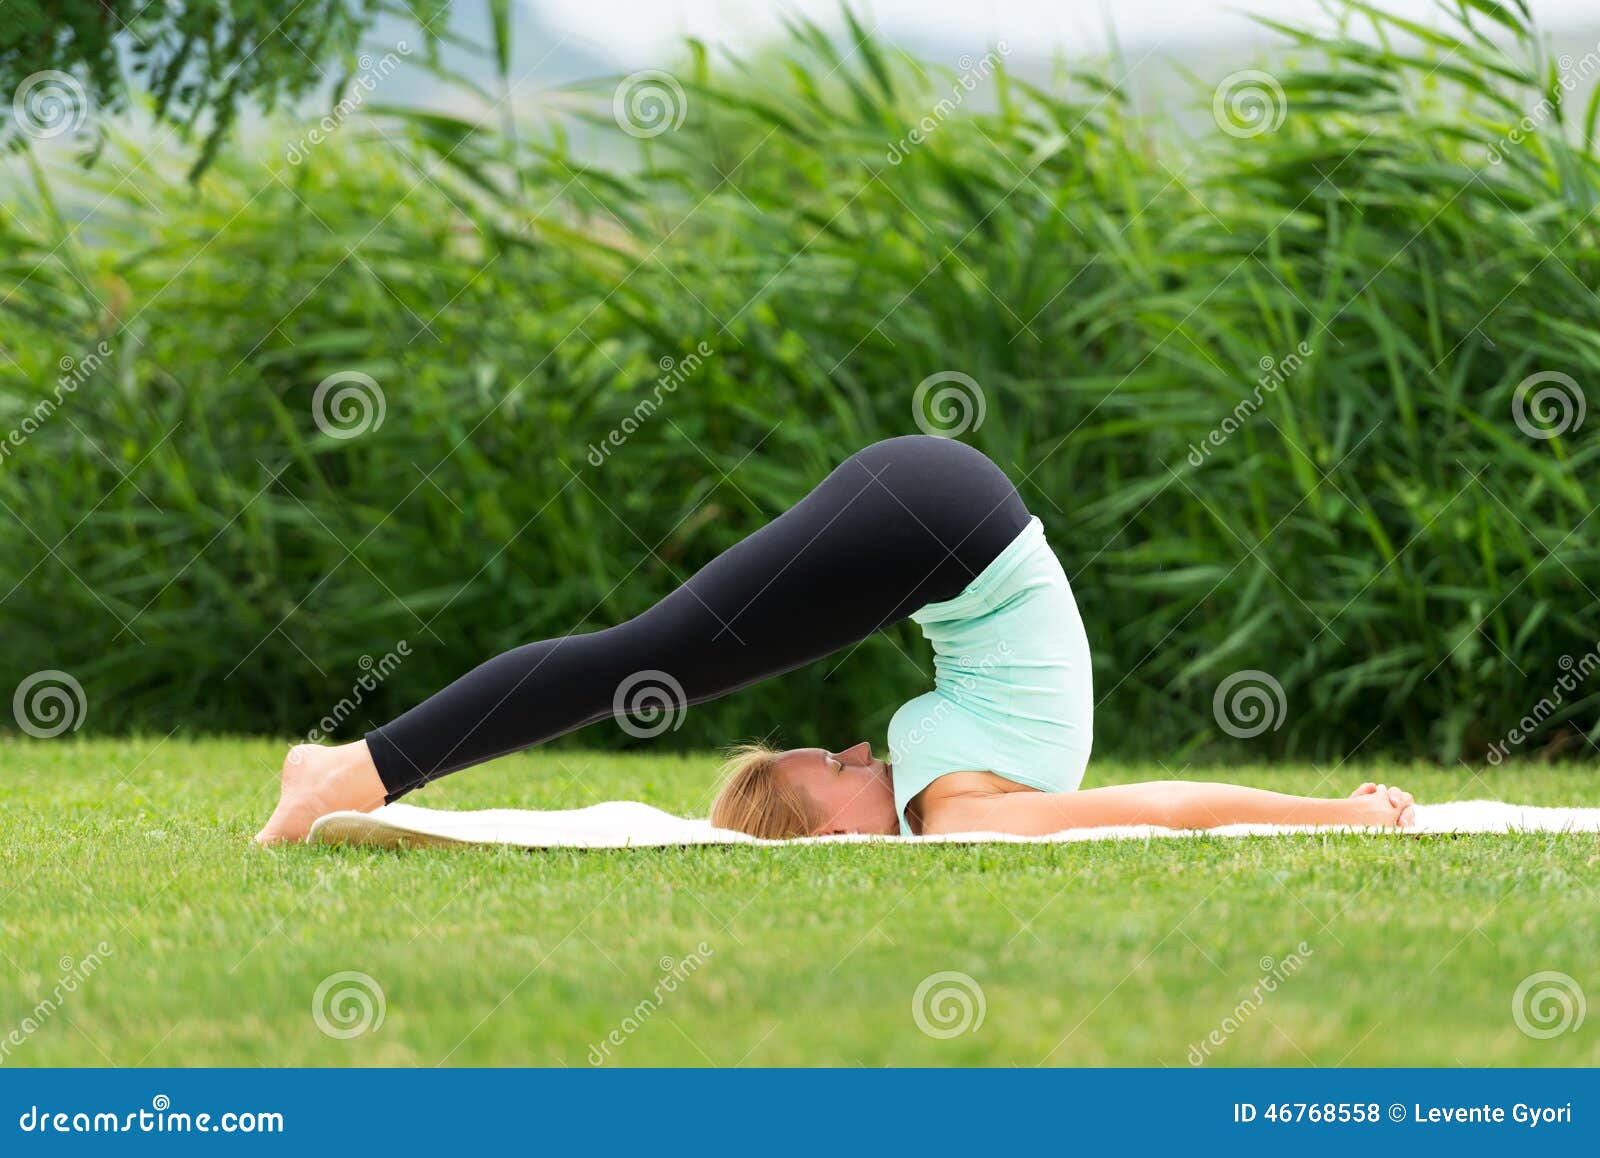 woman practicing yoga halasana plow pose